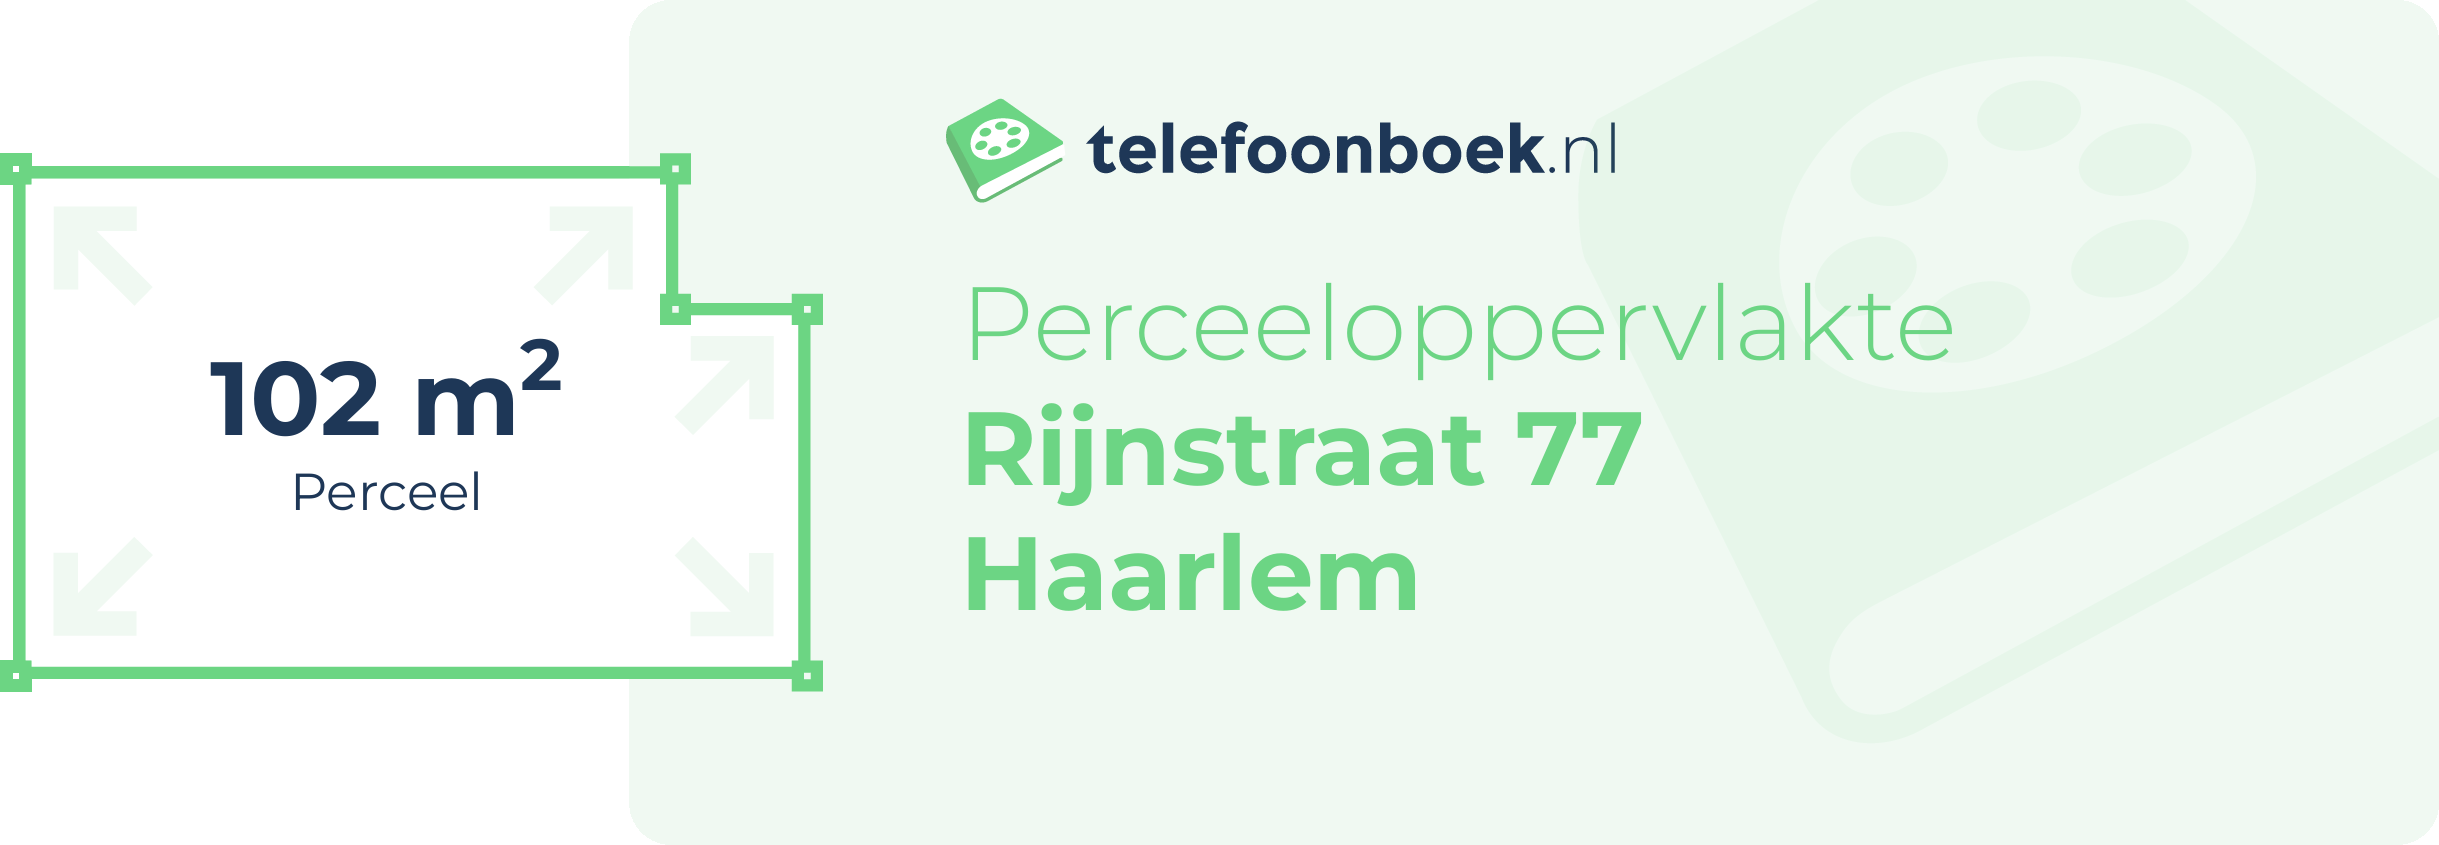 Perceeloppervlakte Rijnstraat 77 Haarlem